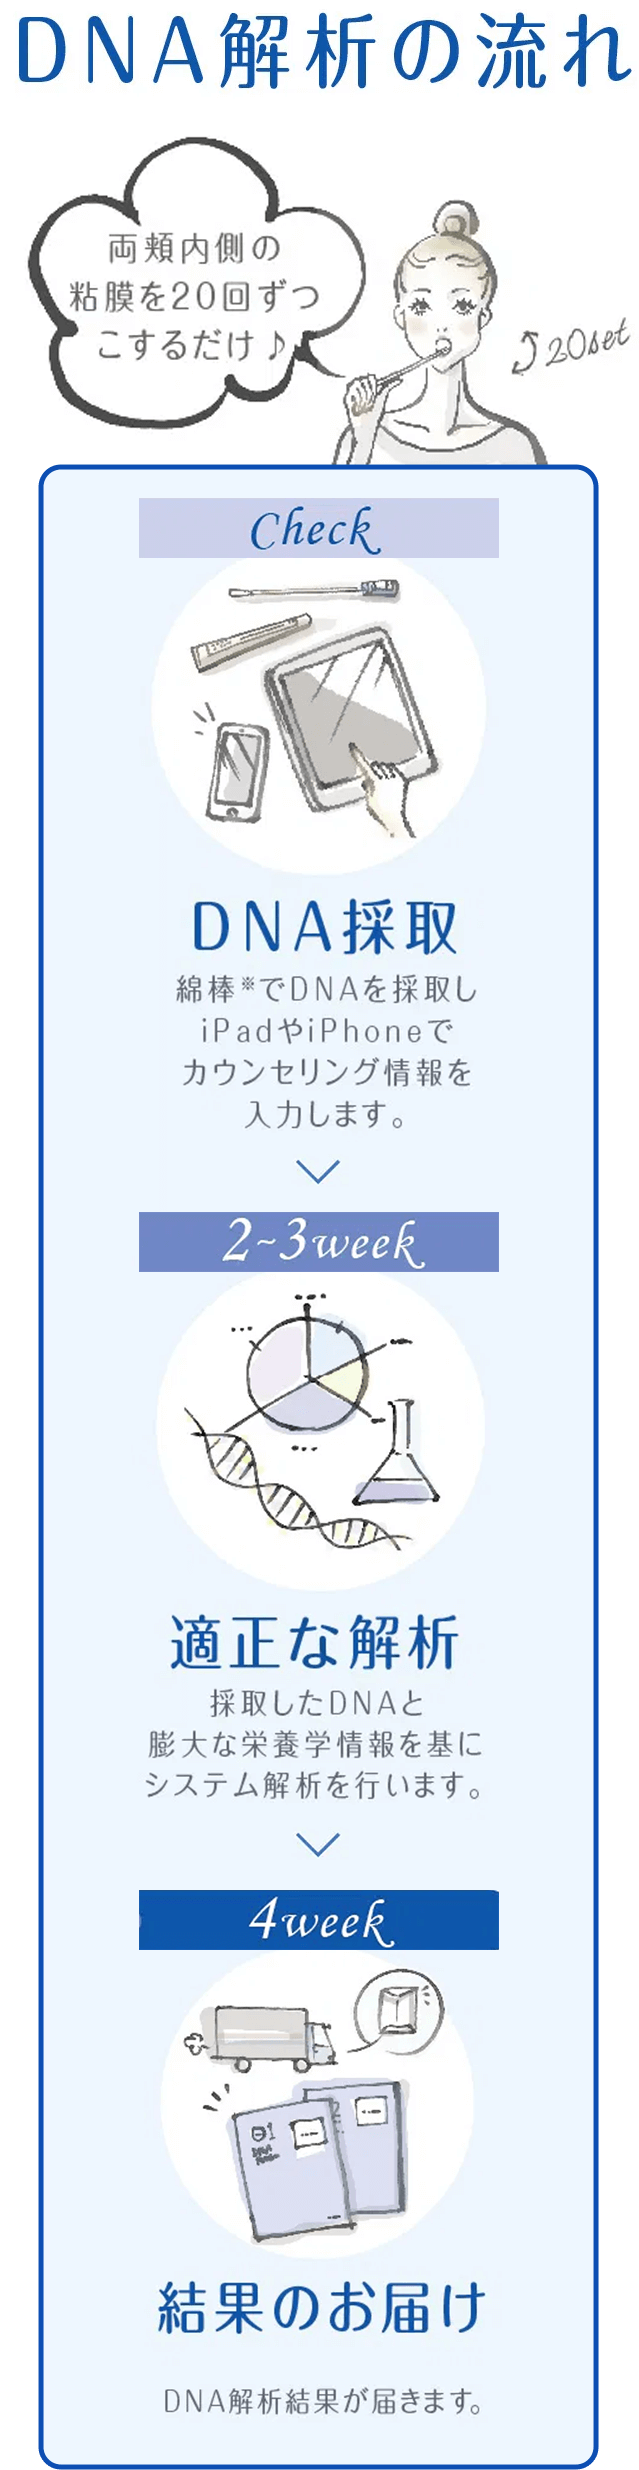 DNA解析の流れ